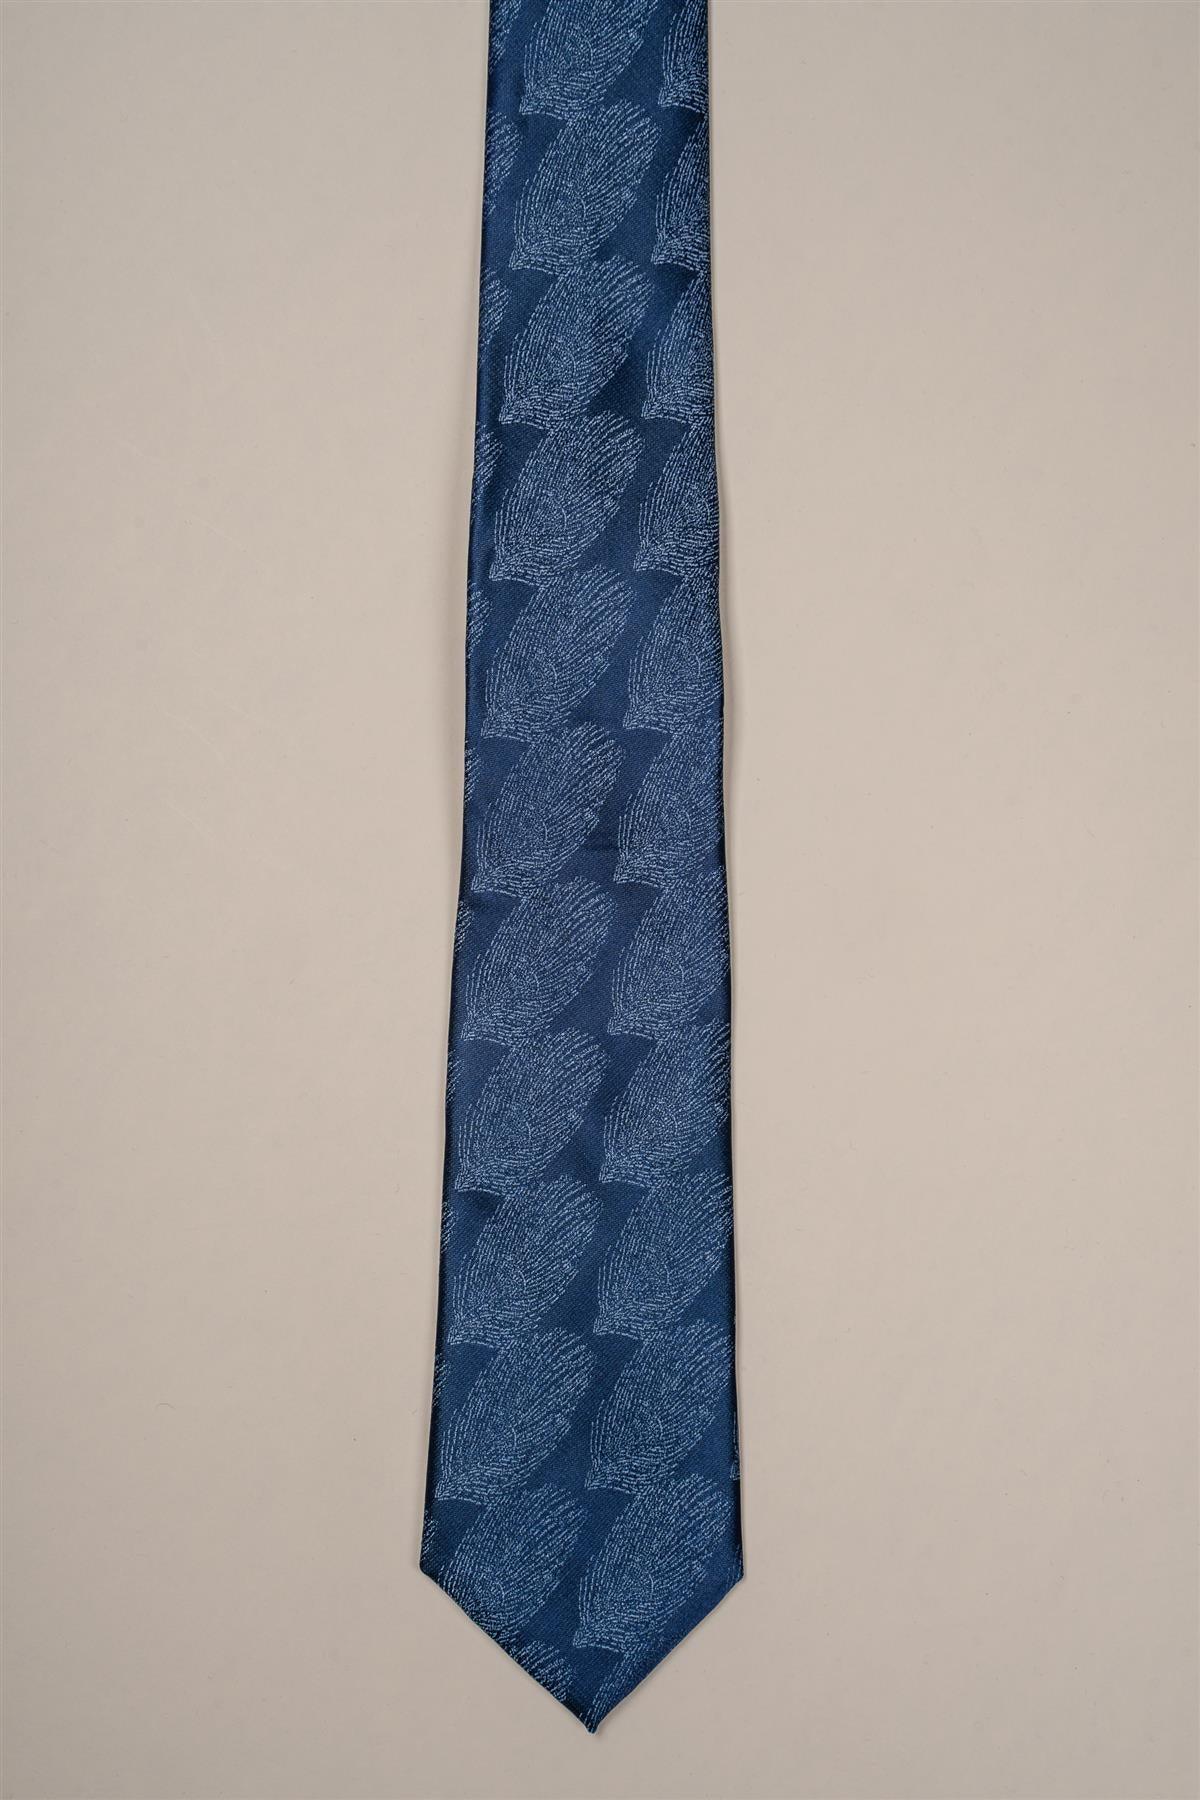 CV806 patterned tie